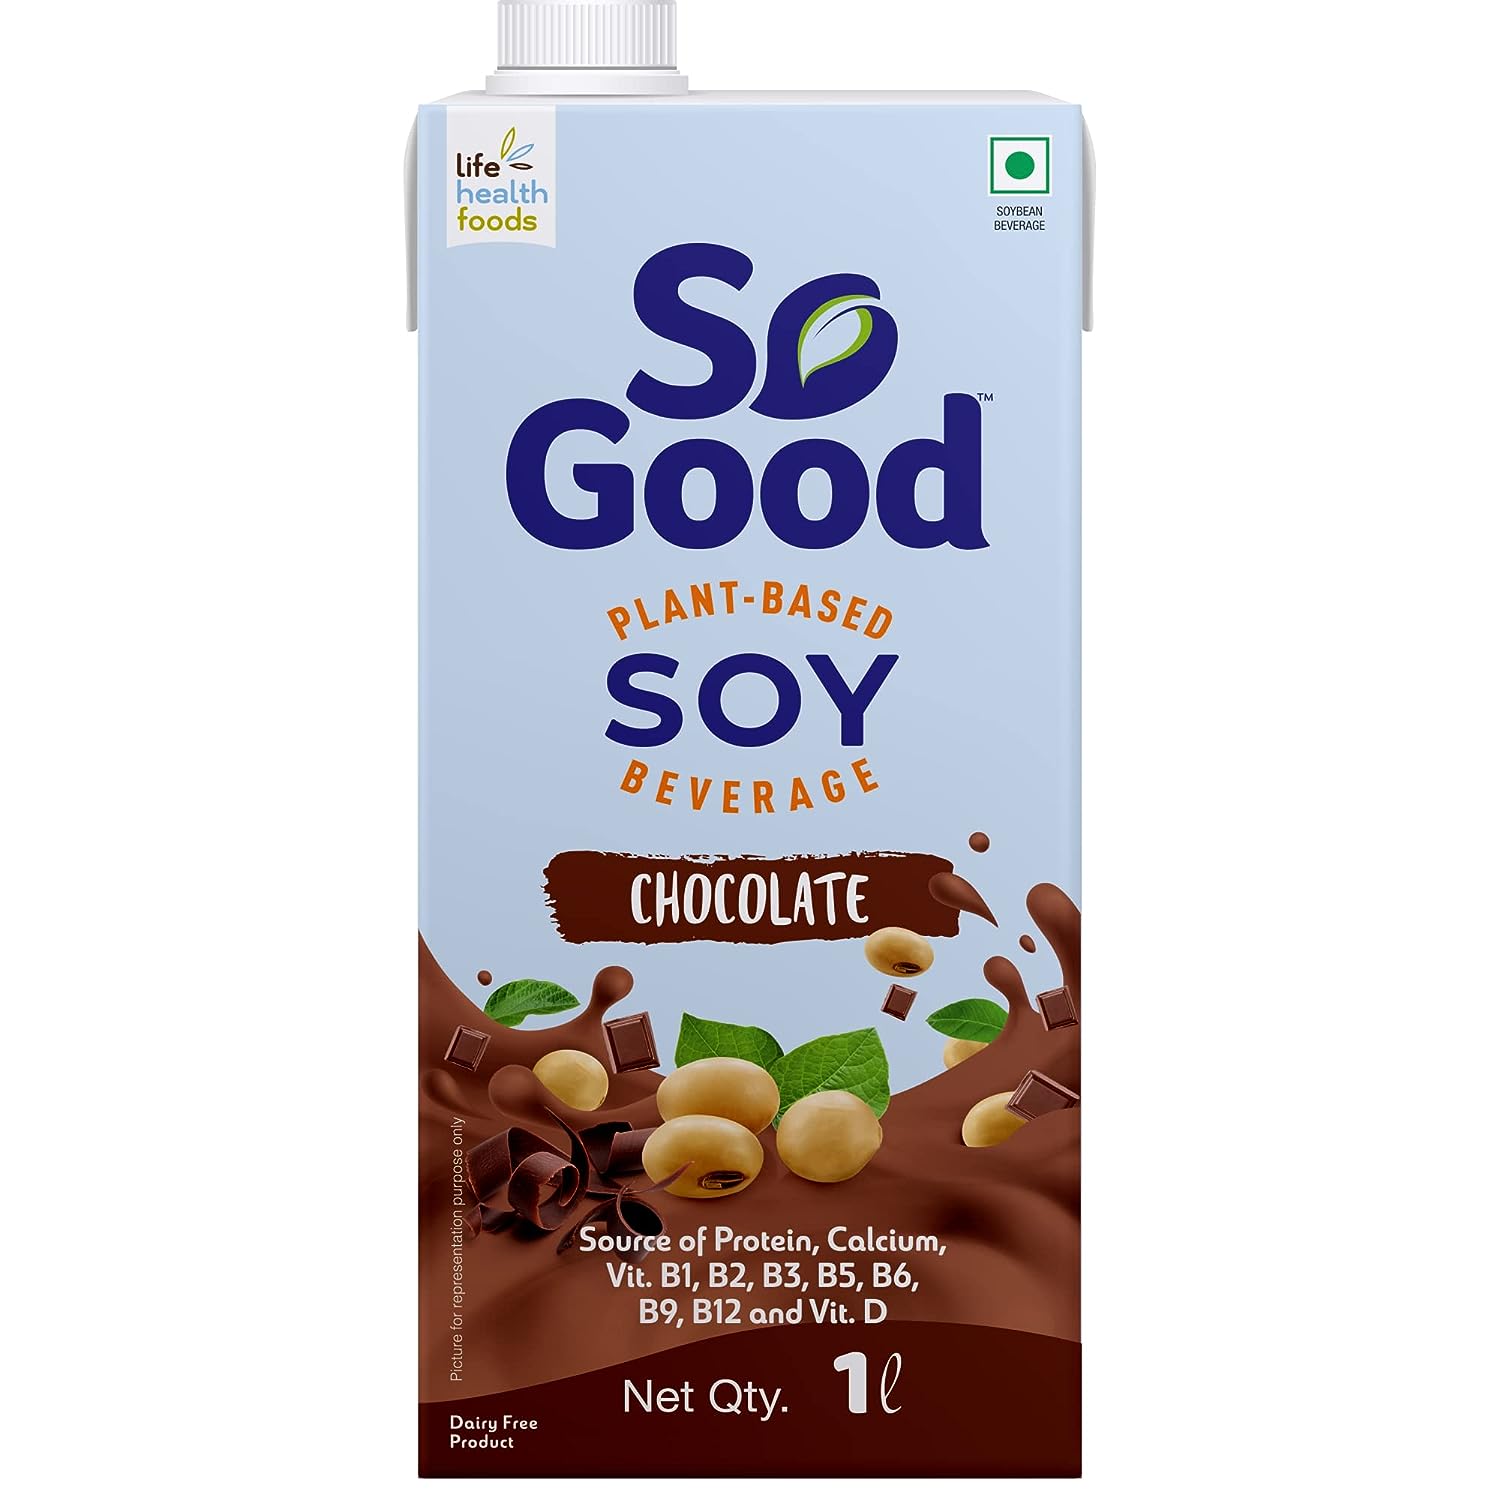 So Good Soy Beverage Chocolate Image